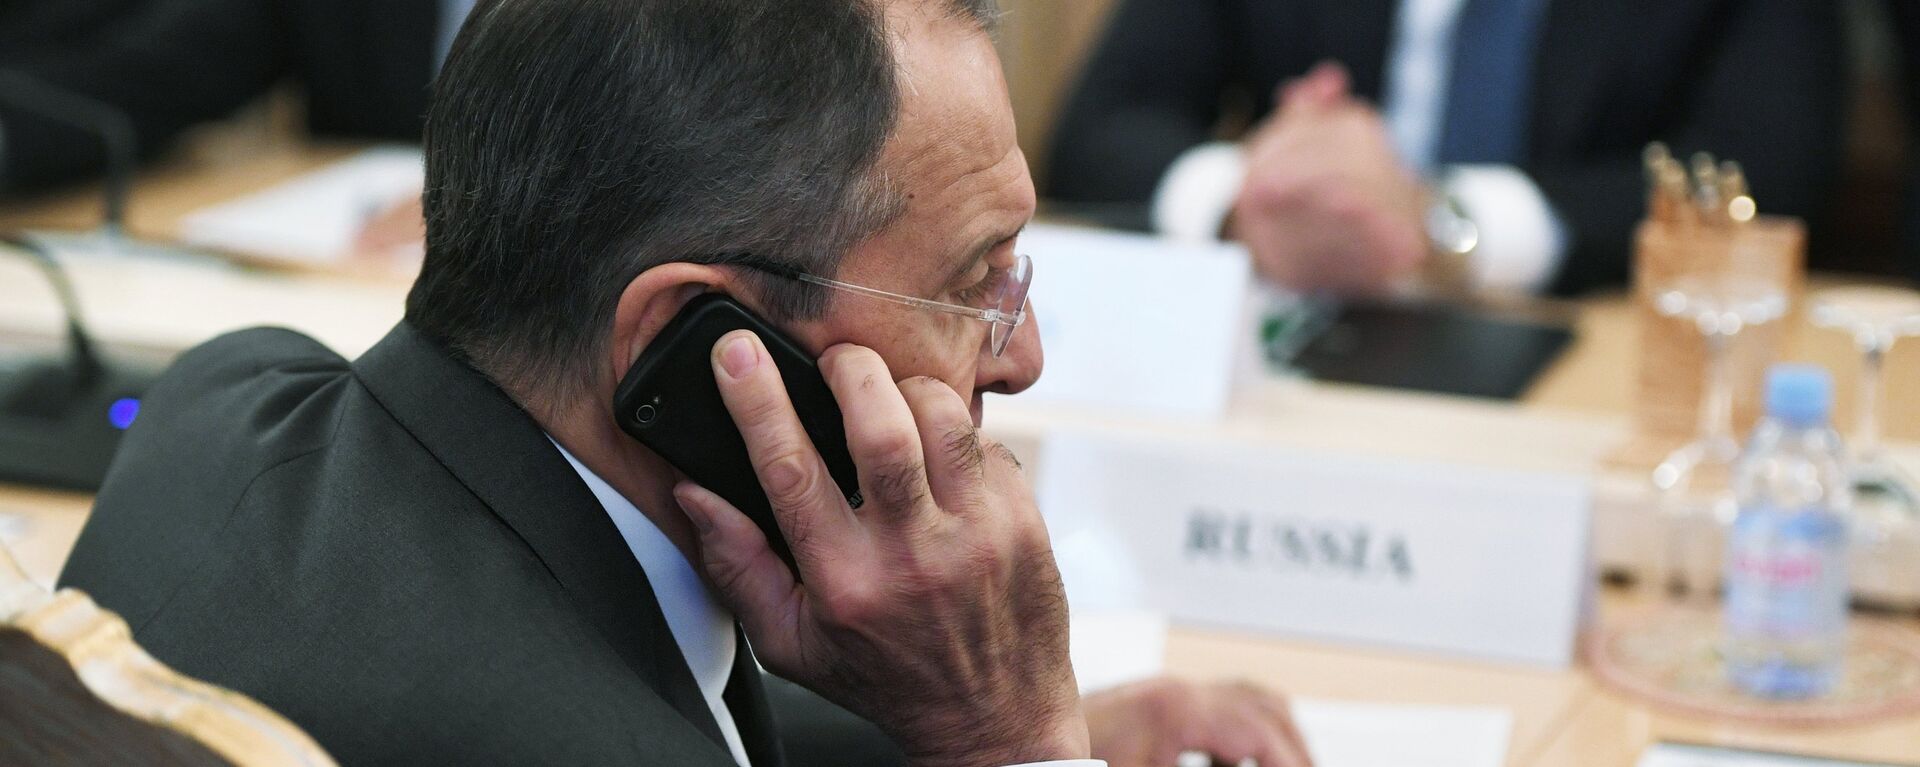 El ministro de Asuntos Exteriores de Rusia, Serguéi Lavrov, habla por teléfono (imagen referencial) - Sputnik Mundo, 1920, 13.09.2022